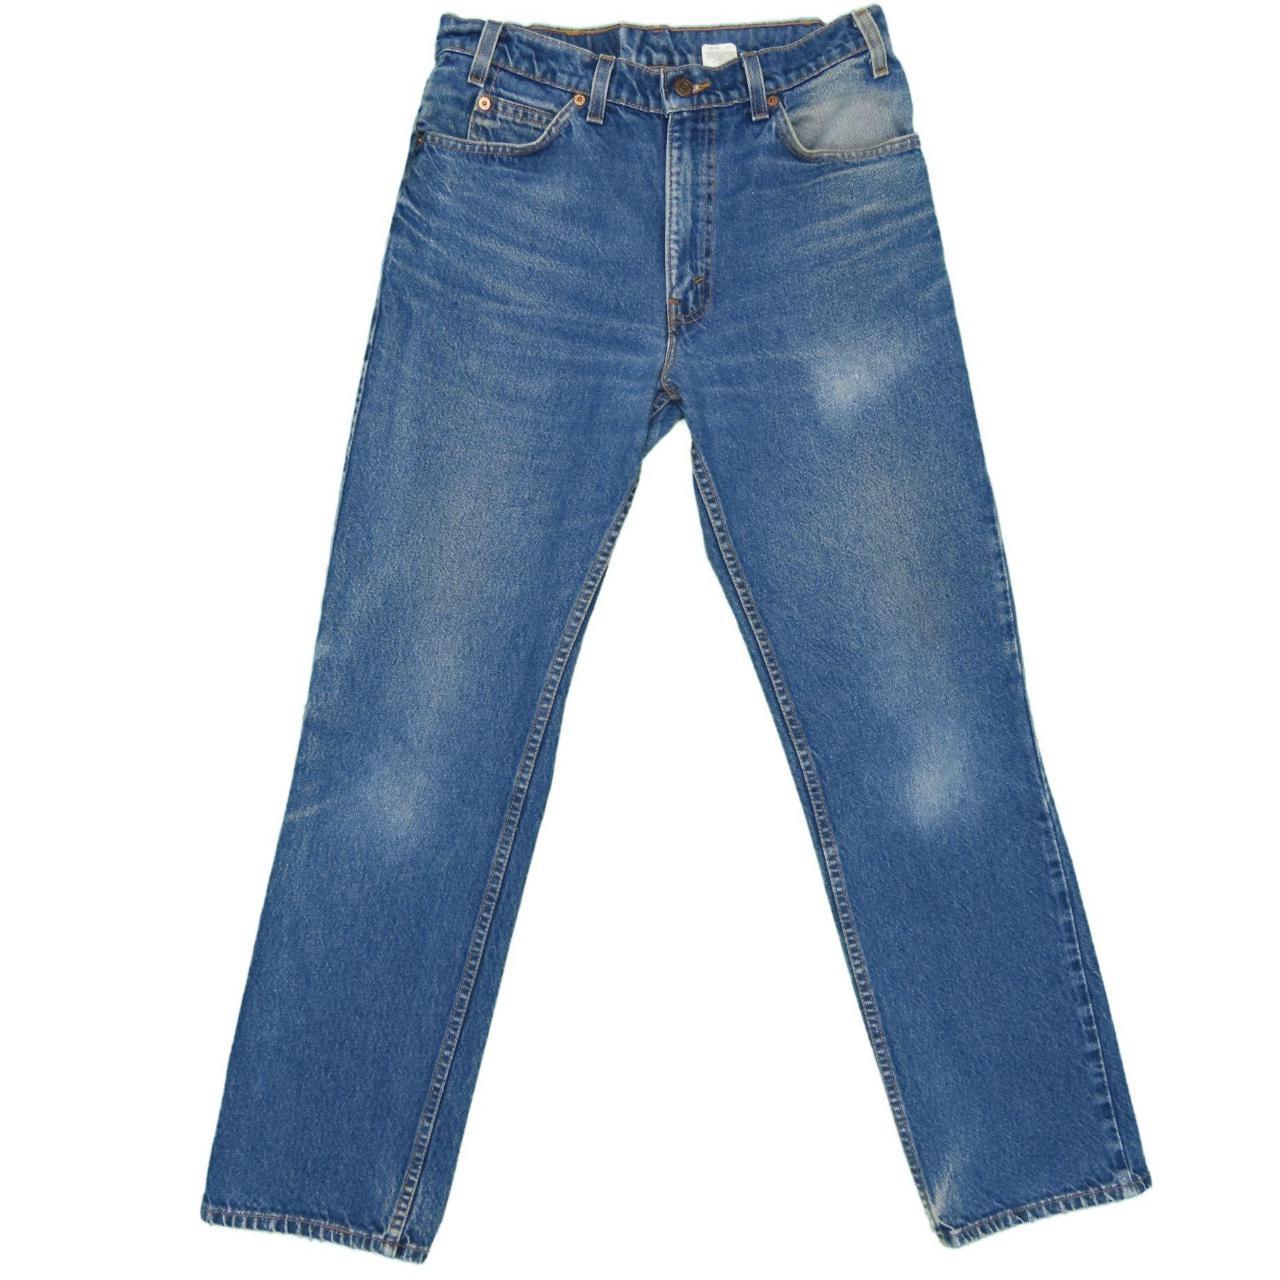 1990s Vintage Levis 518 Orange Tab Jeans 31x31 100%... - Depop